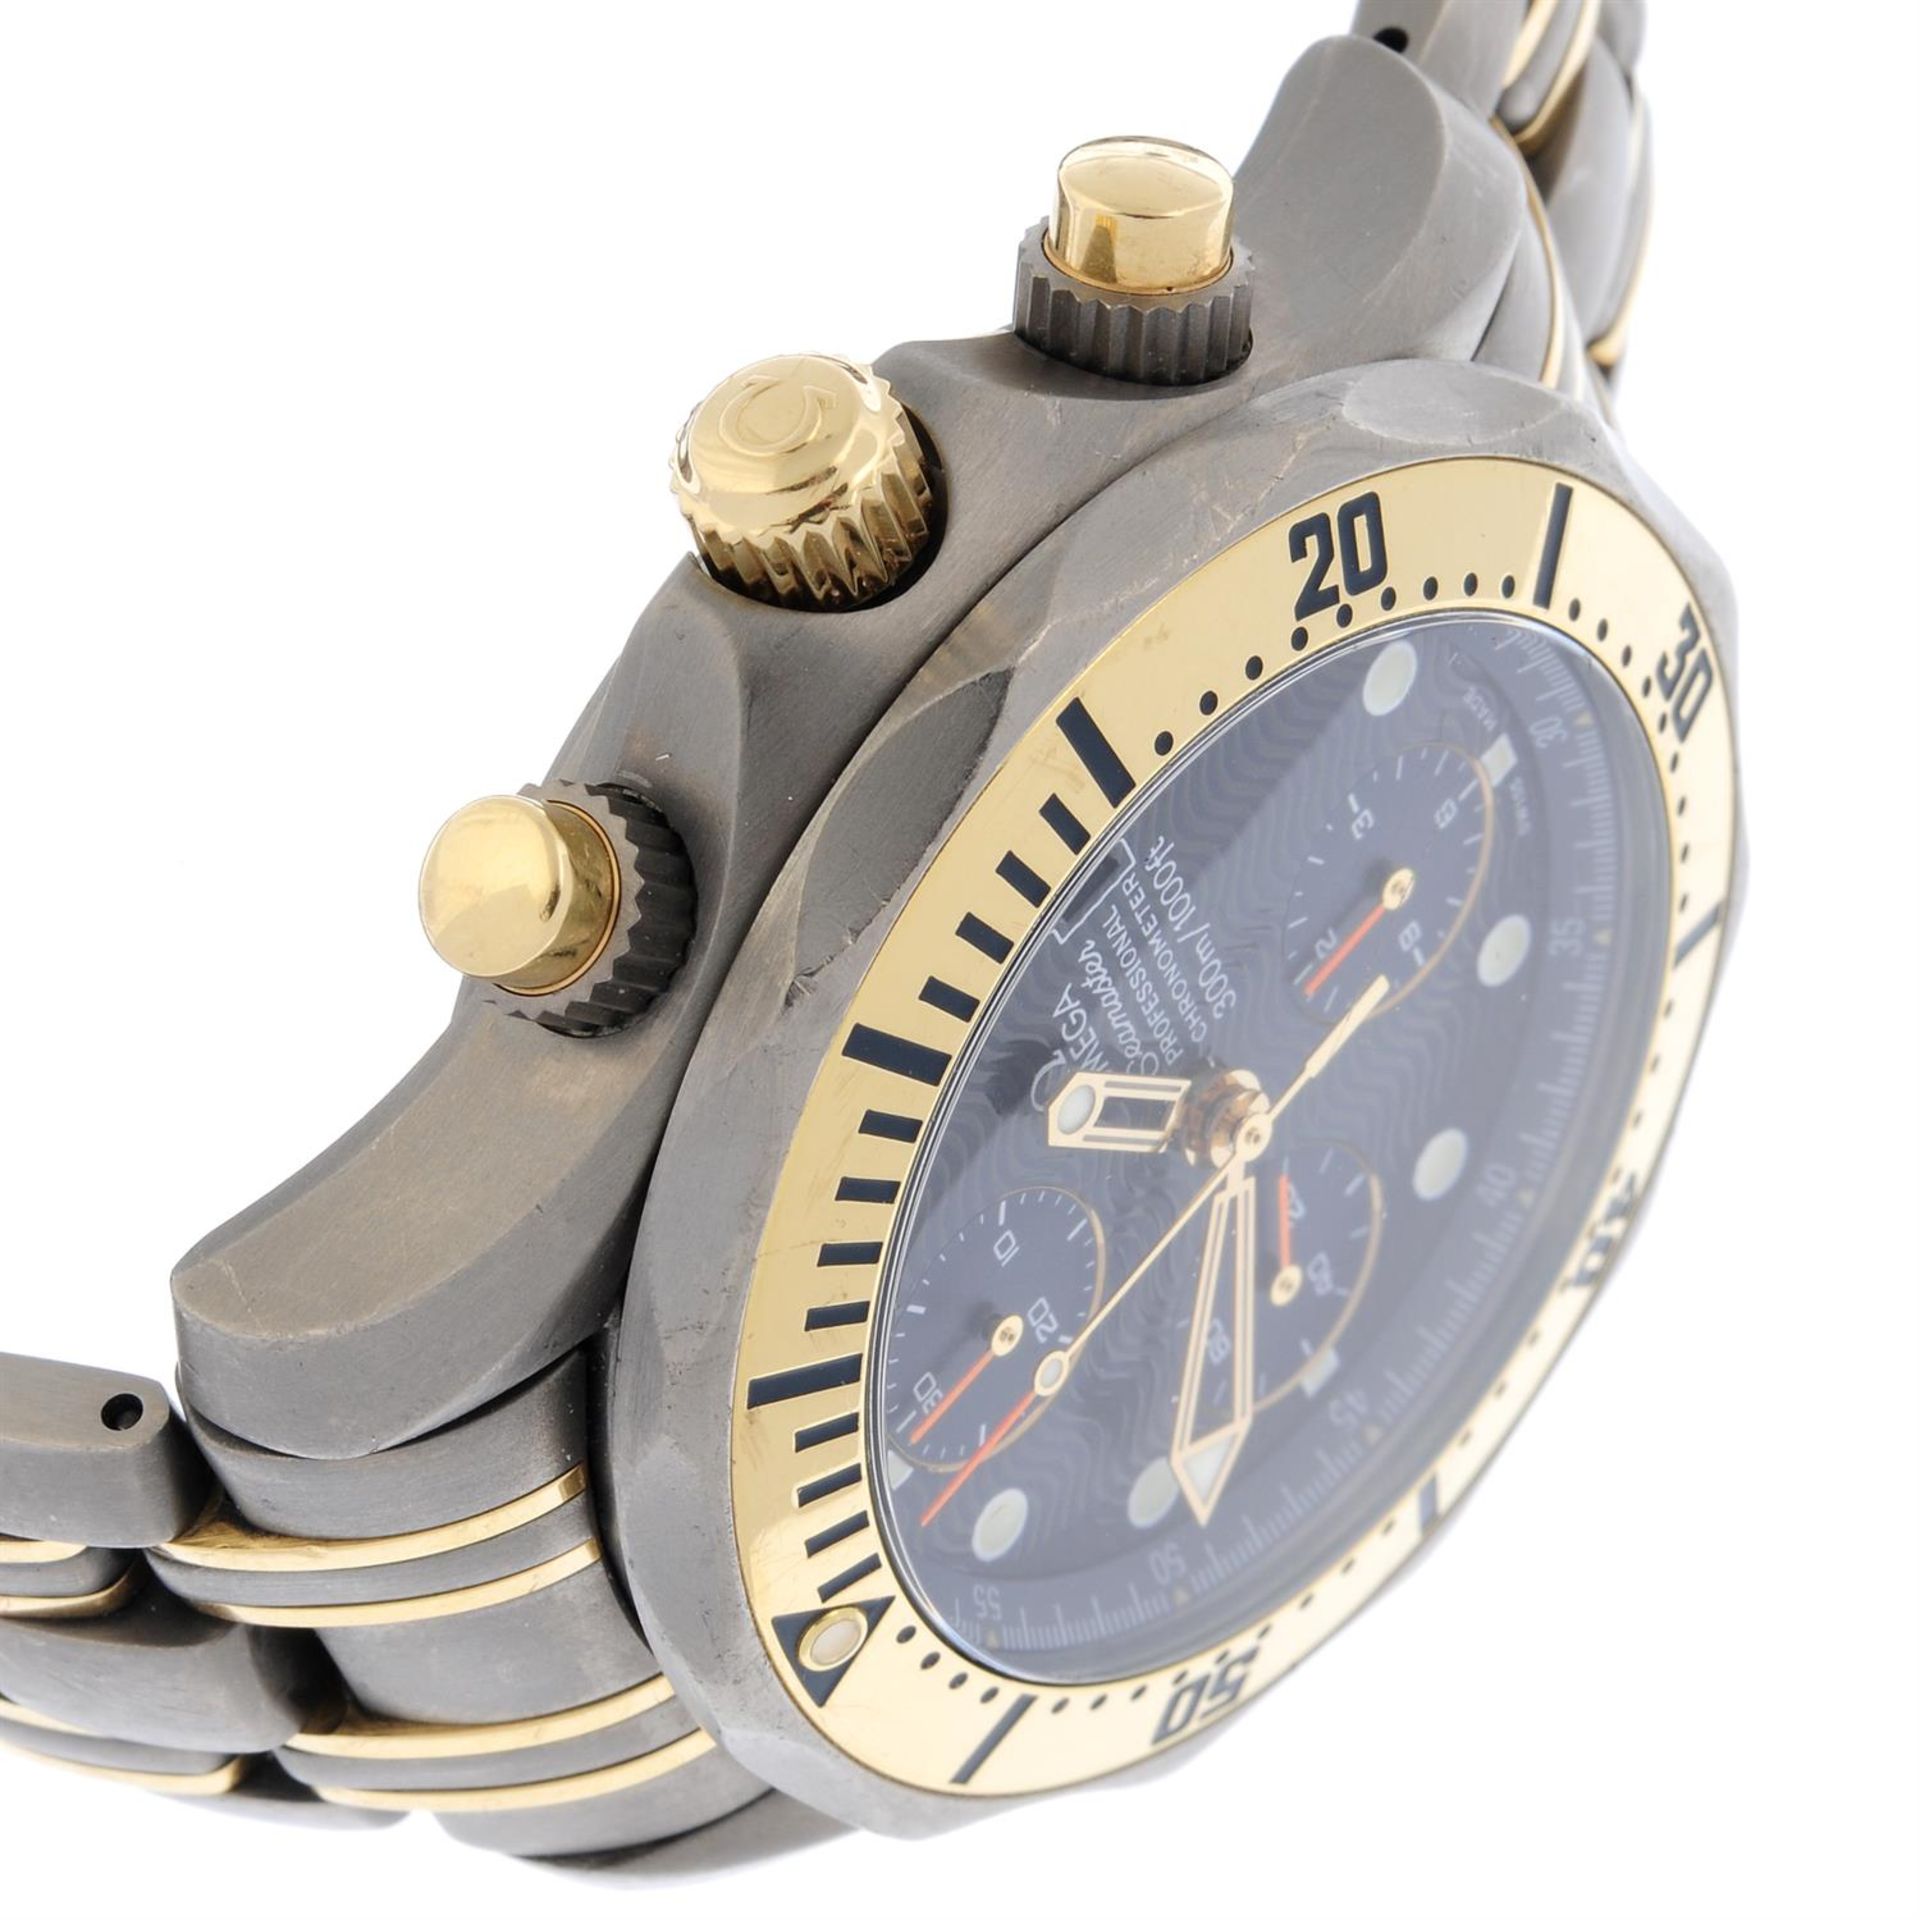 OMEGA - a bi-metal Seamaster Professional chronograph bracelet watch, 42mm. - Image 3 of 5